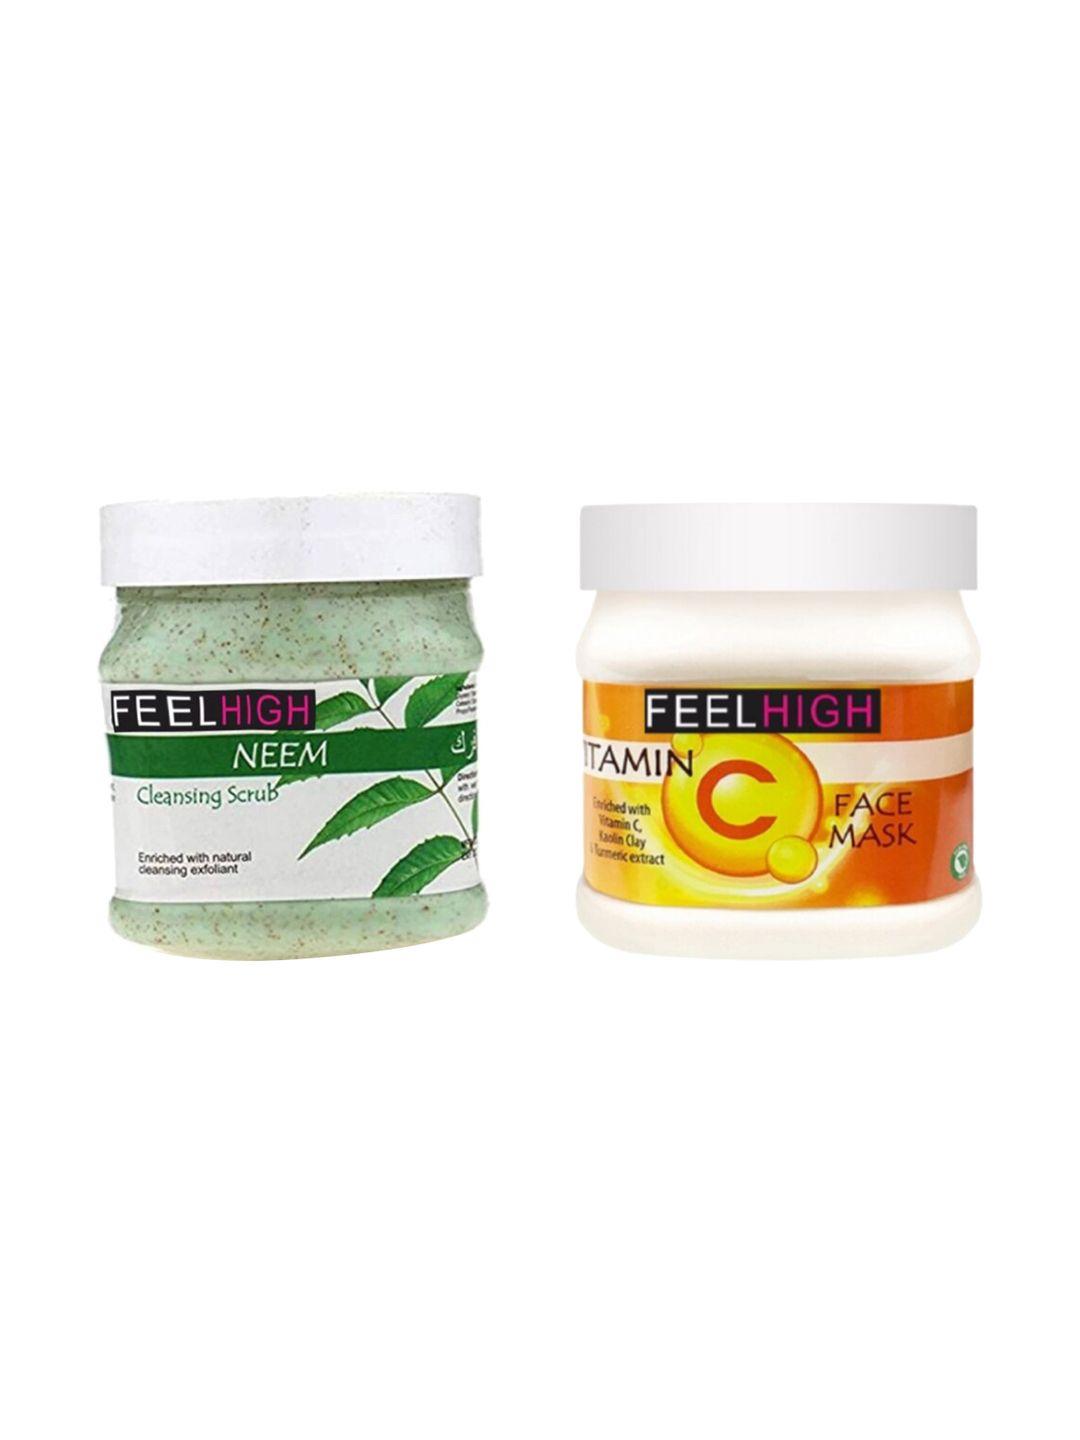 feelhigh neem scrub and vitamin c mask